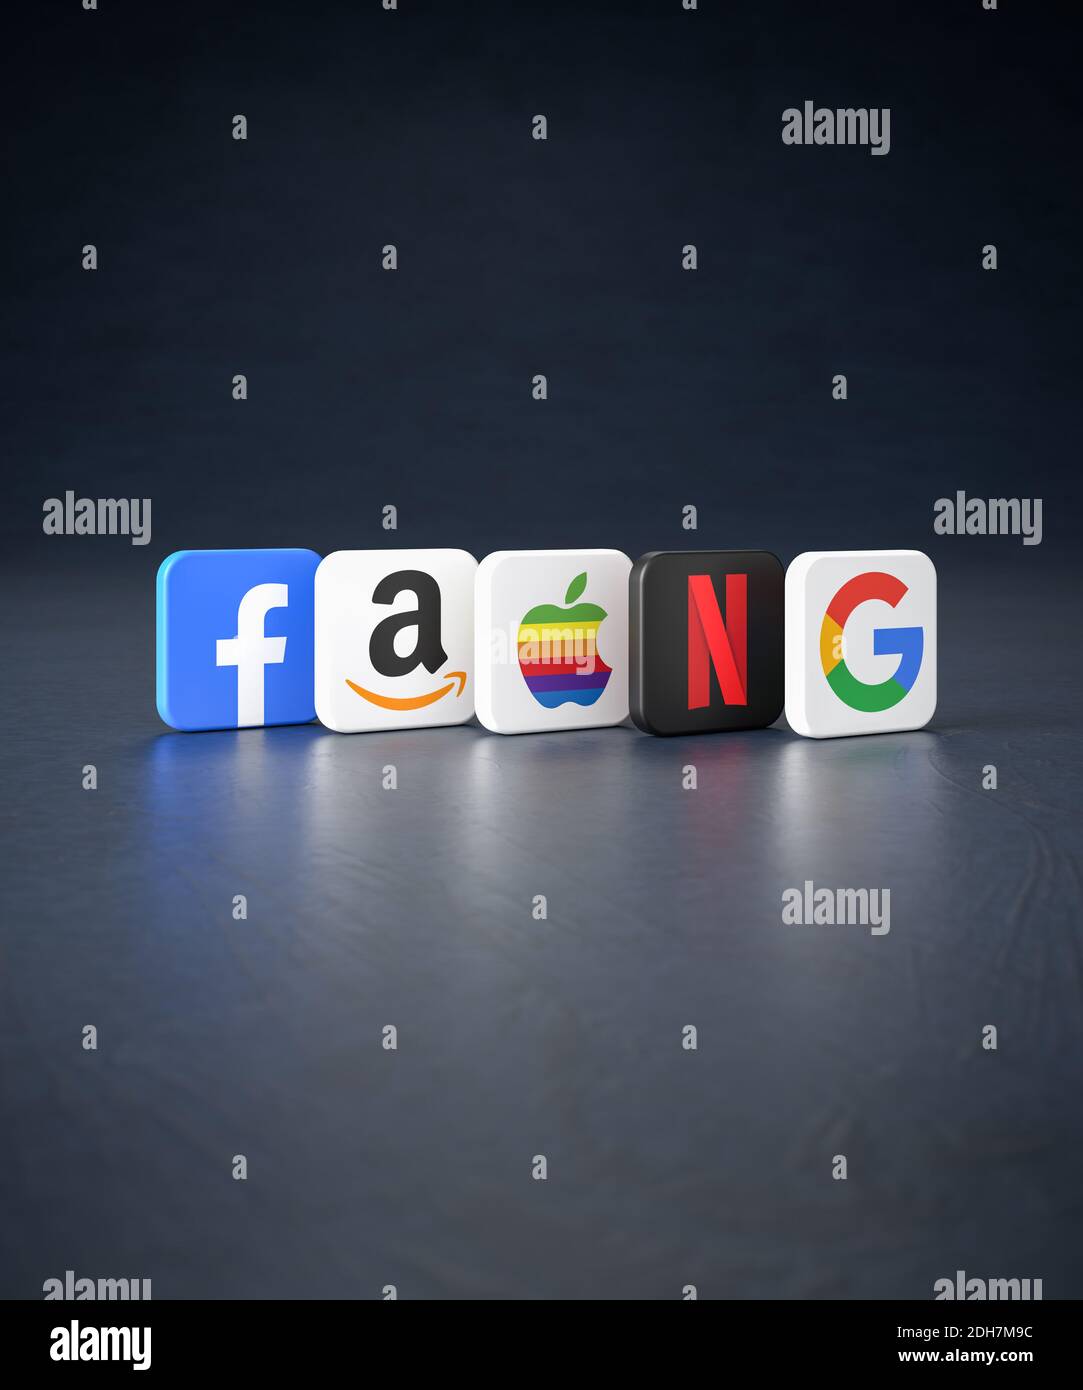 Logos of the so called FAANG shares on a dark background. The tech giants Facebook, Amazon, Apple, Netflix, Google / Alphabet. Stock Photo